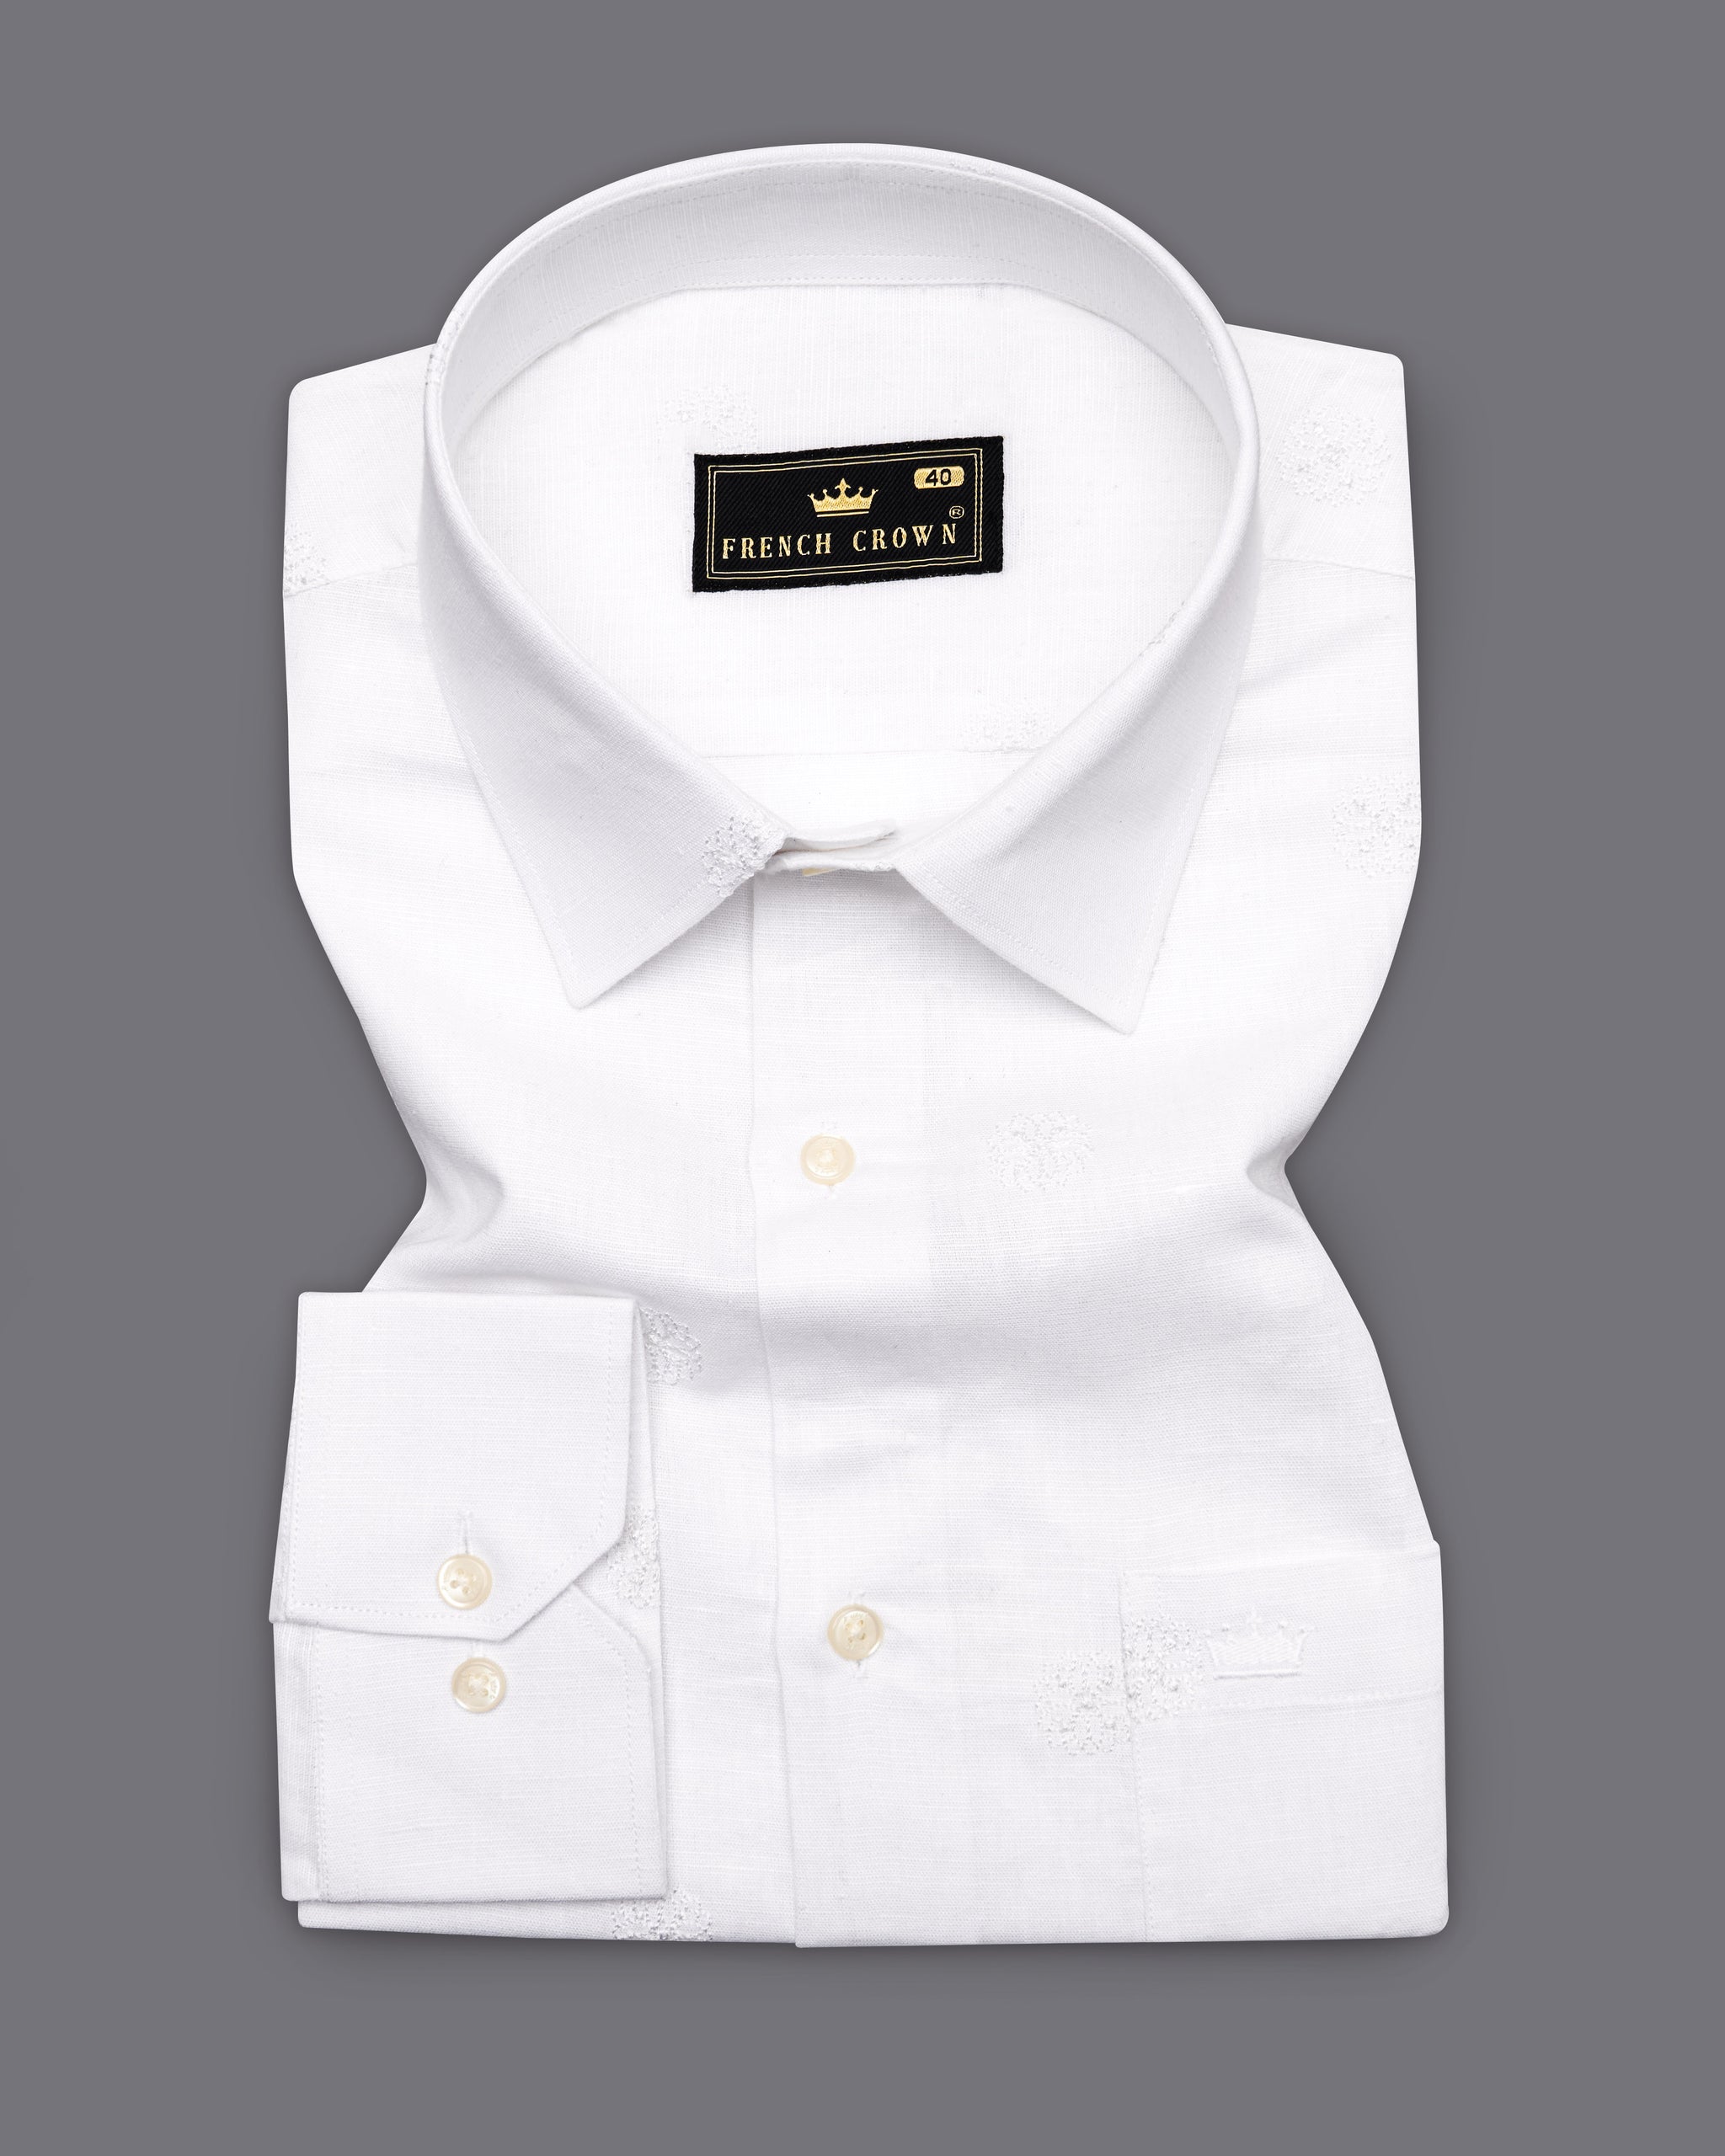 Bright White Formal/Casual Textured Premium Linen Shirt For Men